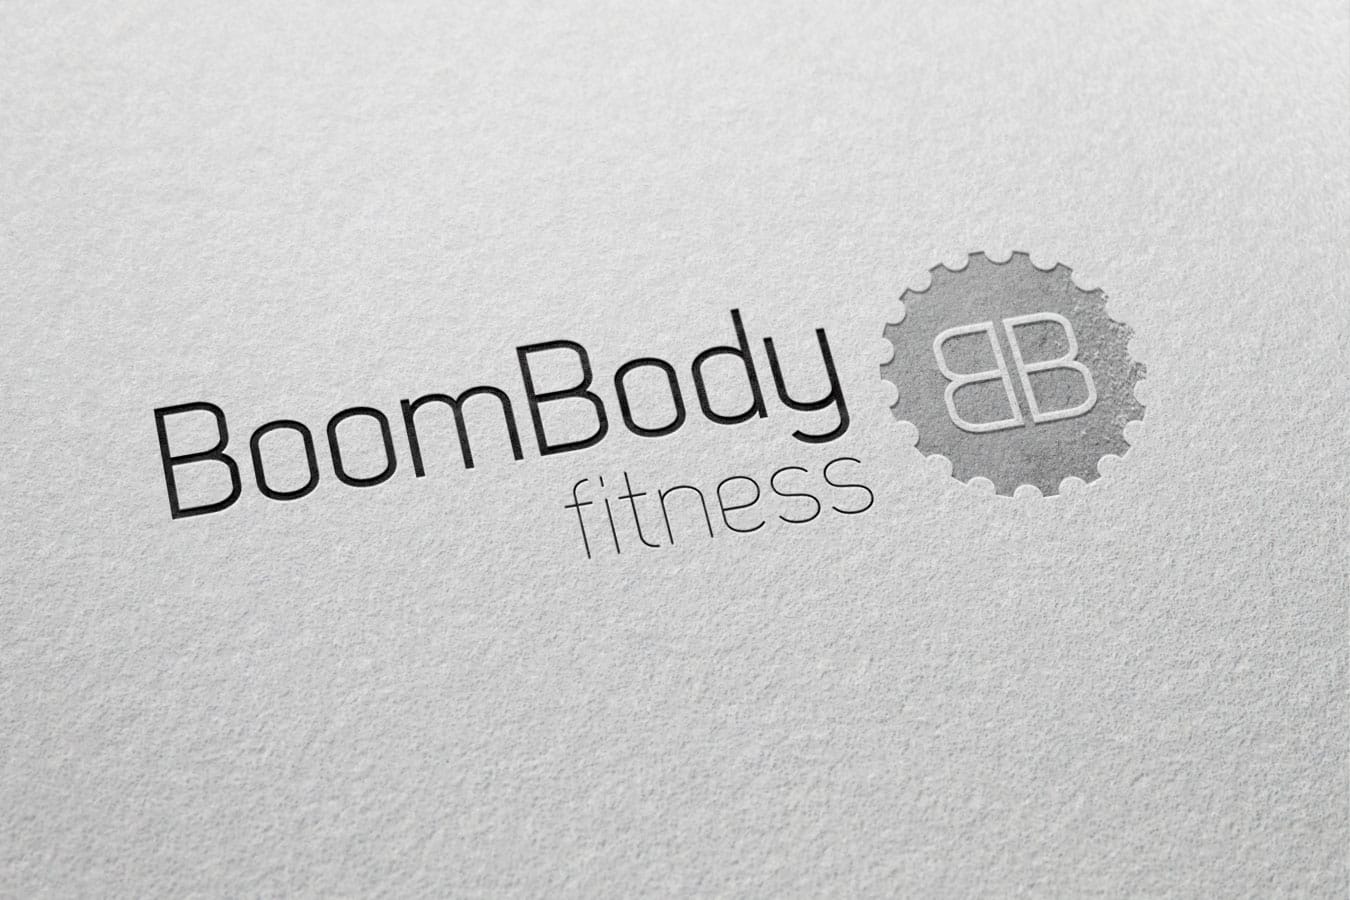 logos_boombody5